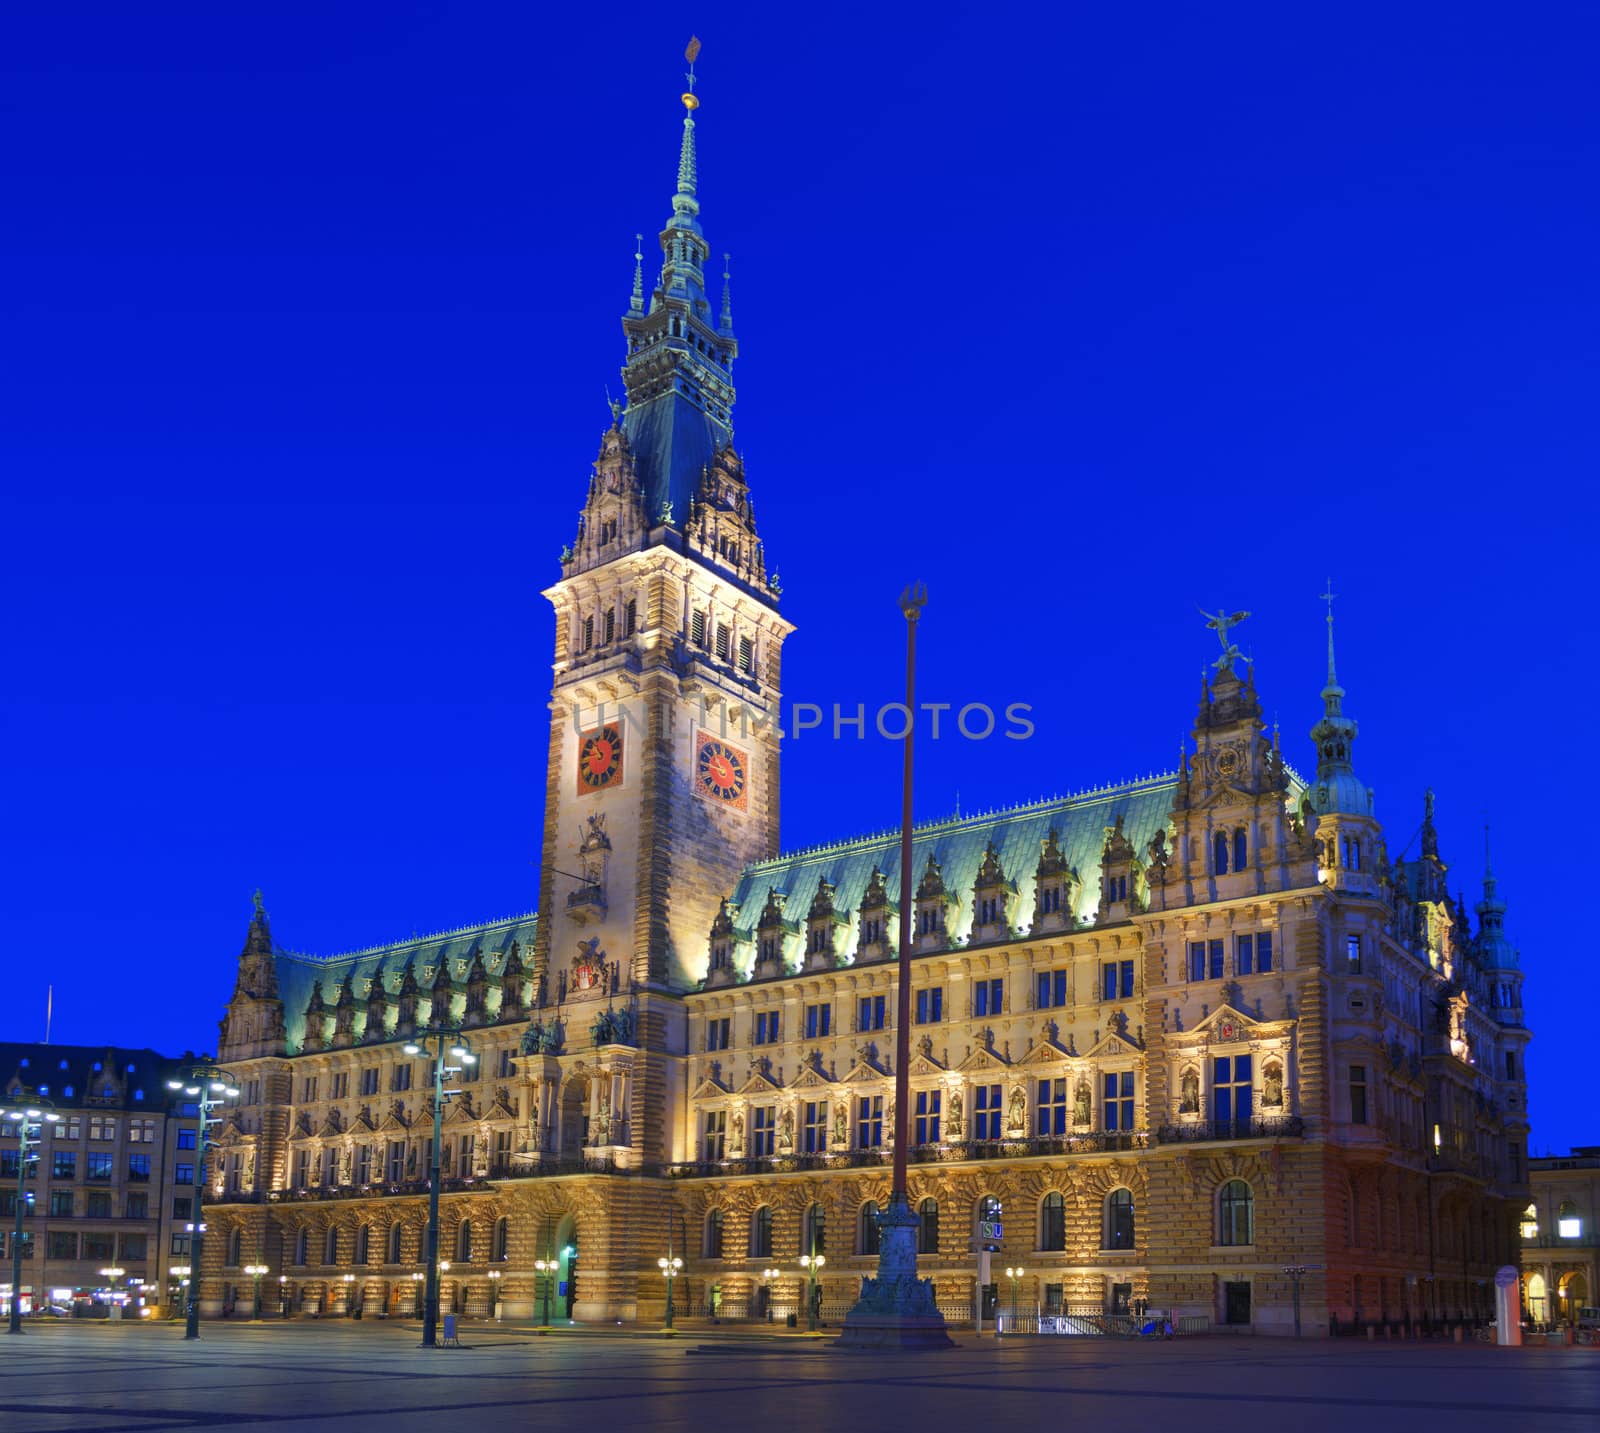 Hamburg town hall by nprause